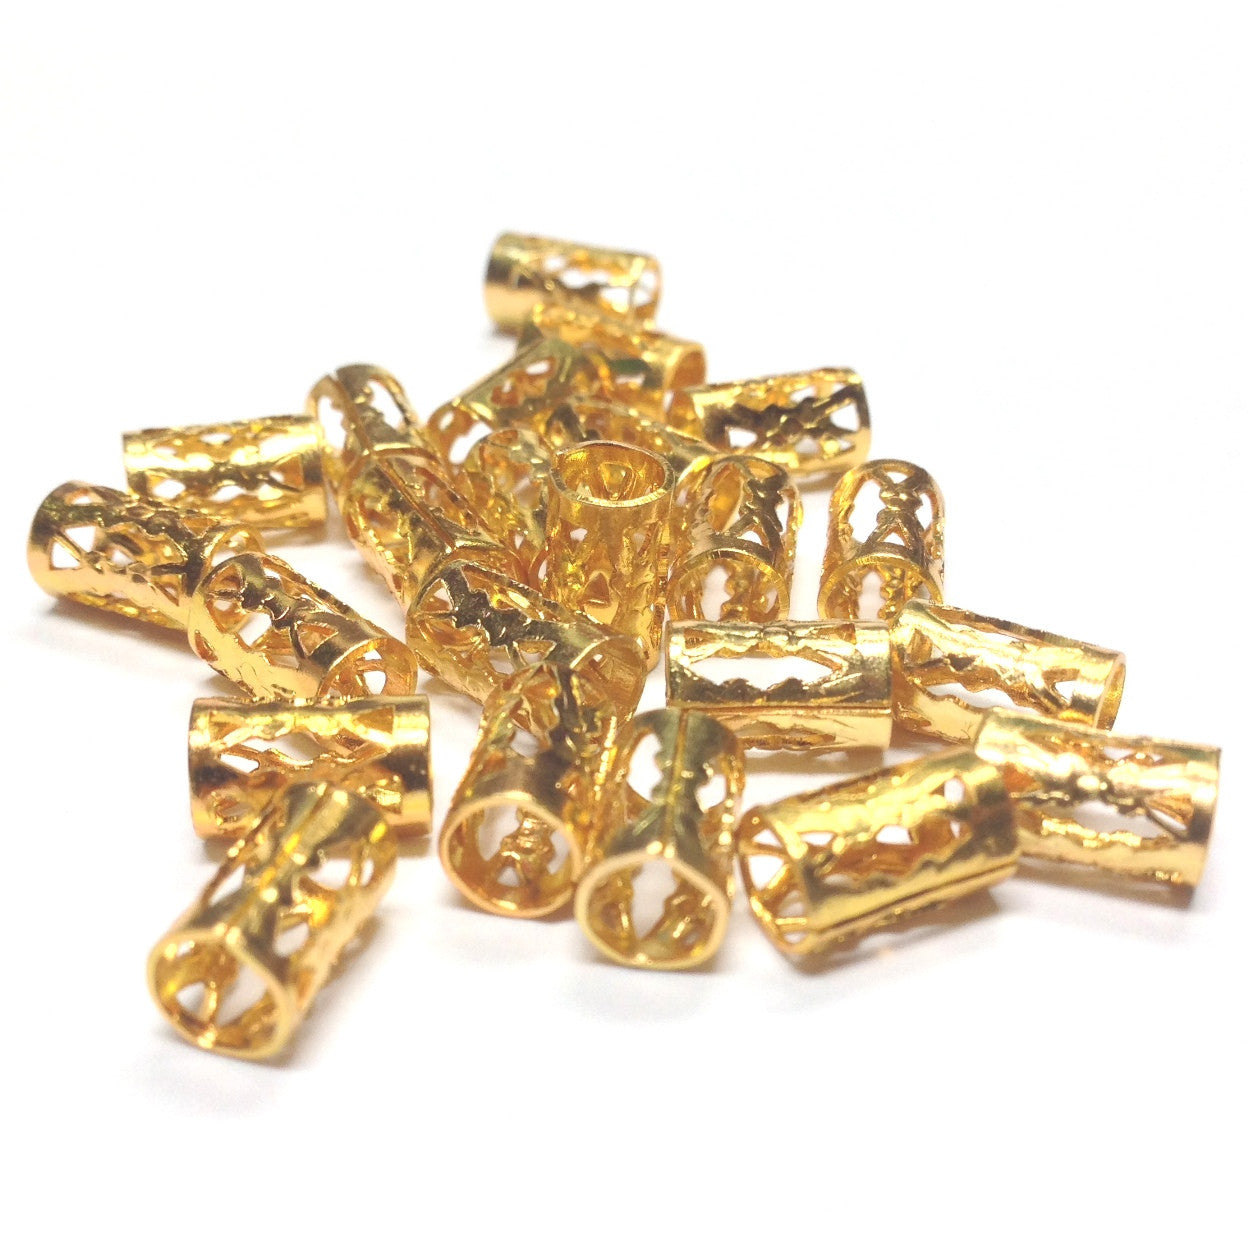 8.5X5MM Goldtone Filigree Tube (72 pieces)